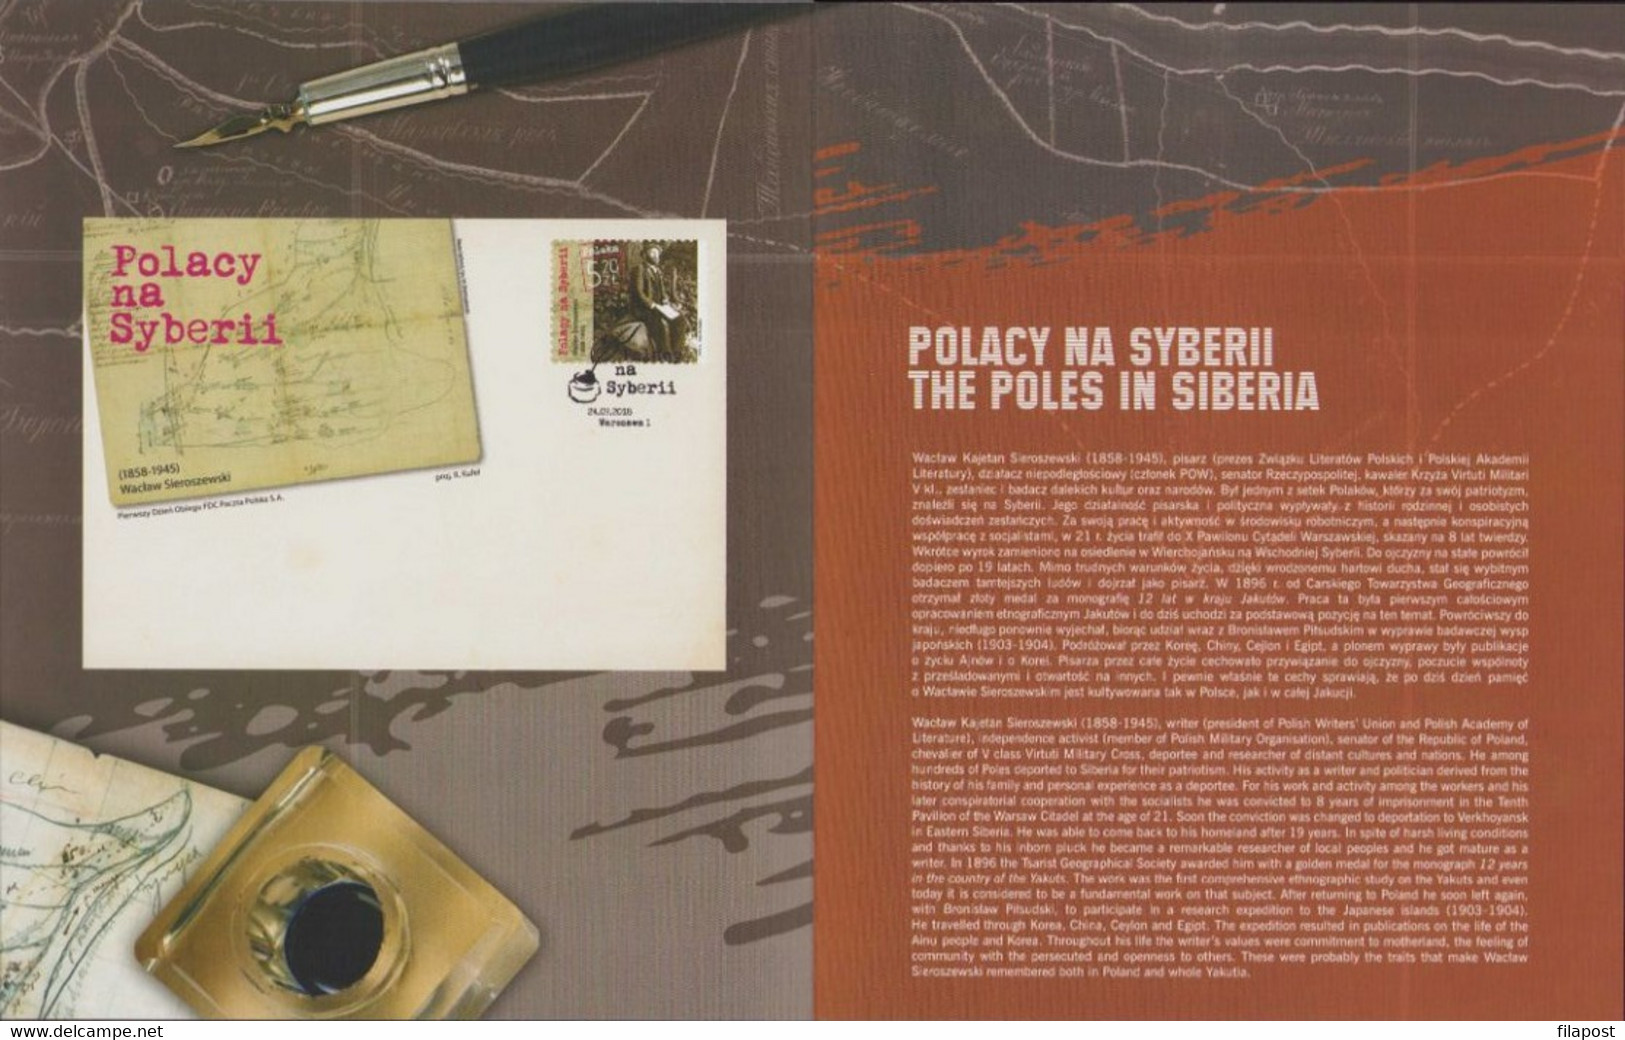 POLAND 2018 Booklet / Mi 5015 / The Poles In Siberia, Waclaw Sieroszewski / Stamp MNH** FV - Markenheftchen